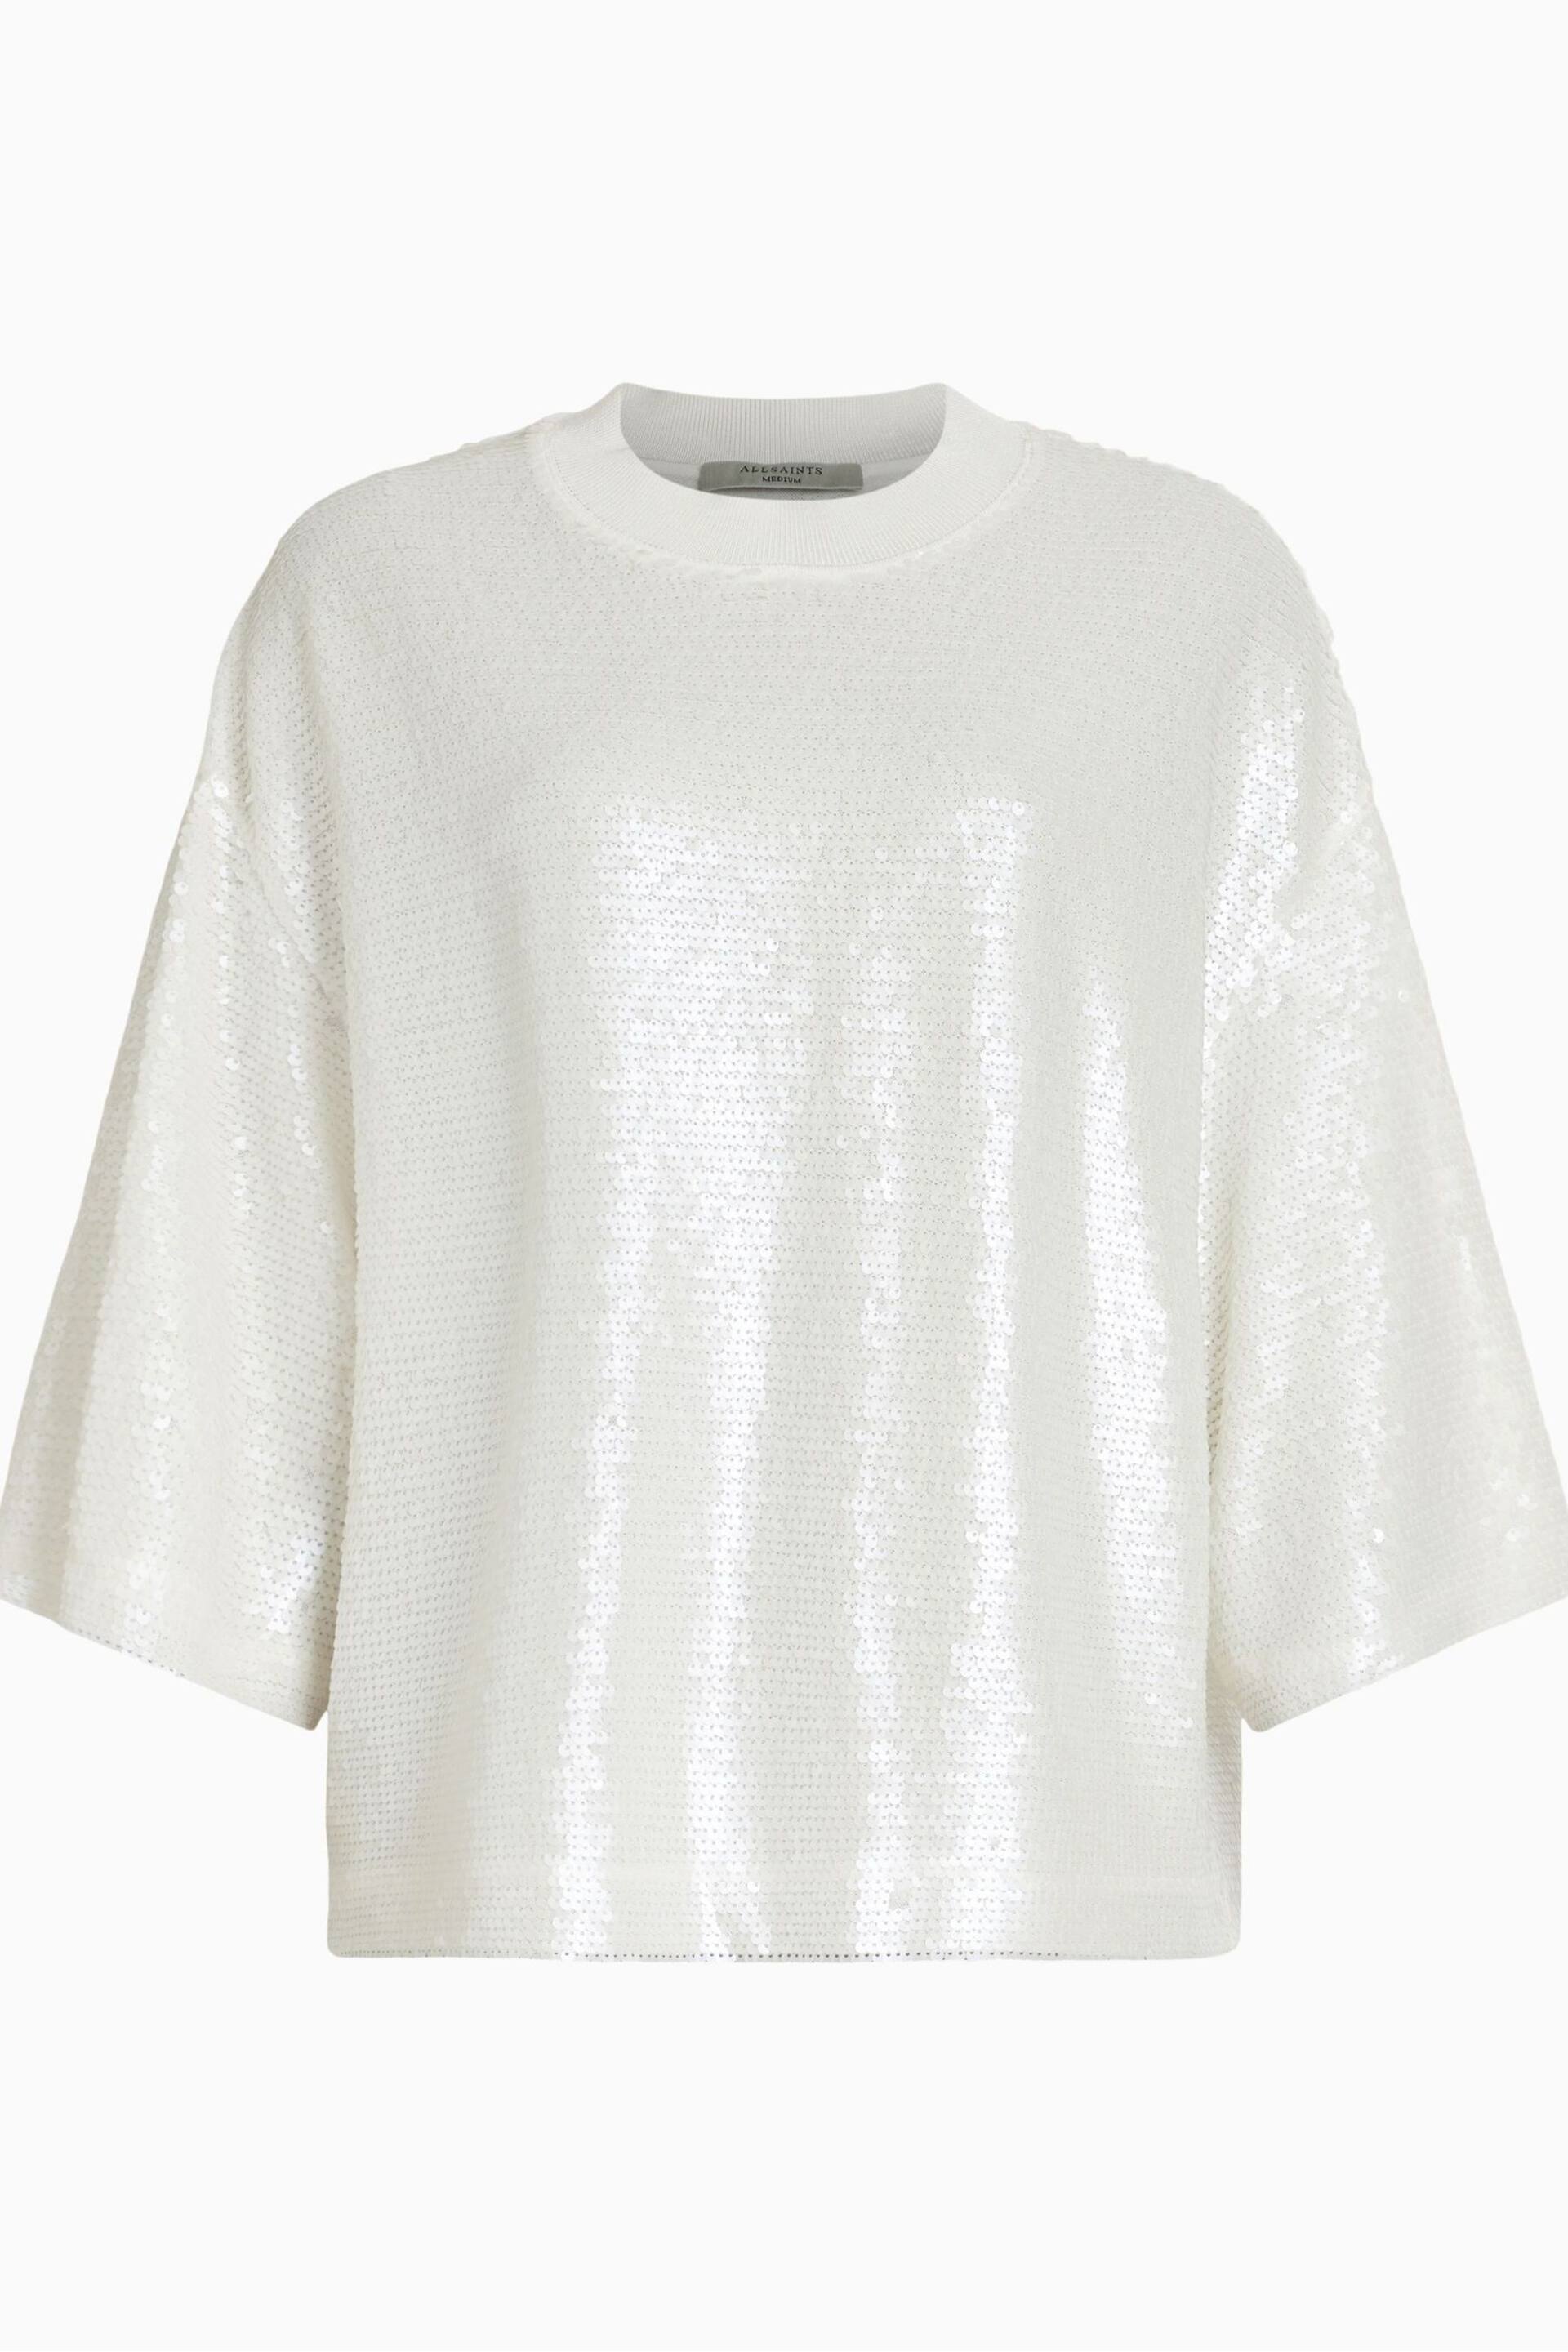 AllSaints Cream Juela T-Shirt - Image 5 of 5